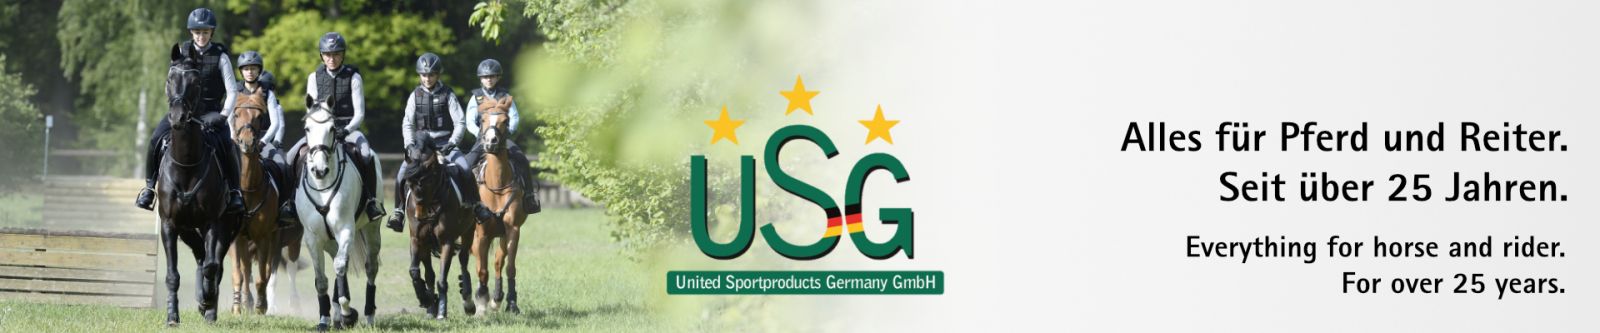 Markenbotschafter & Kooperationen - USG - United Sportproducts Germany GmbH